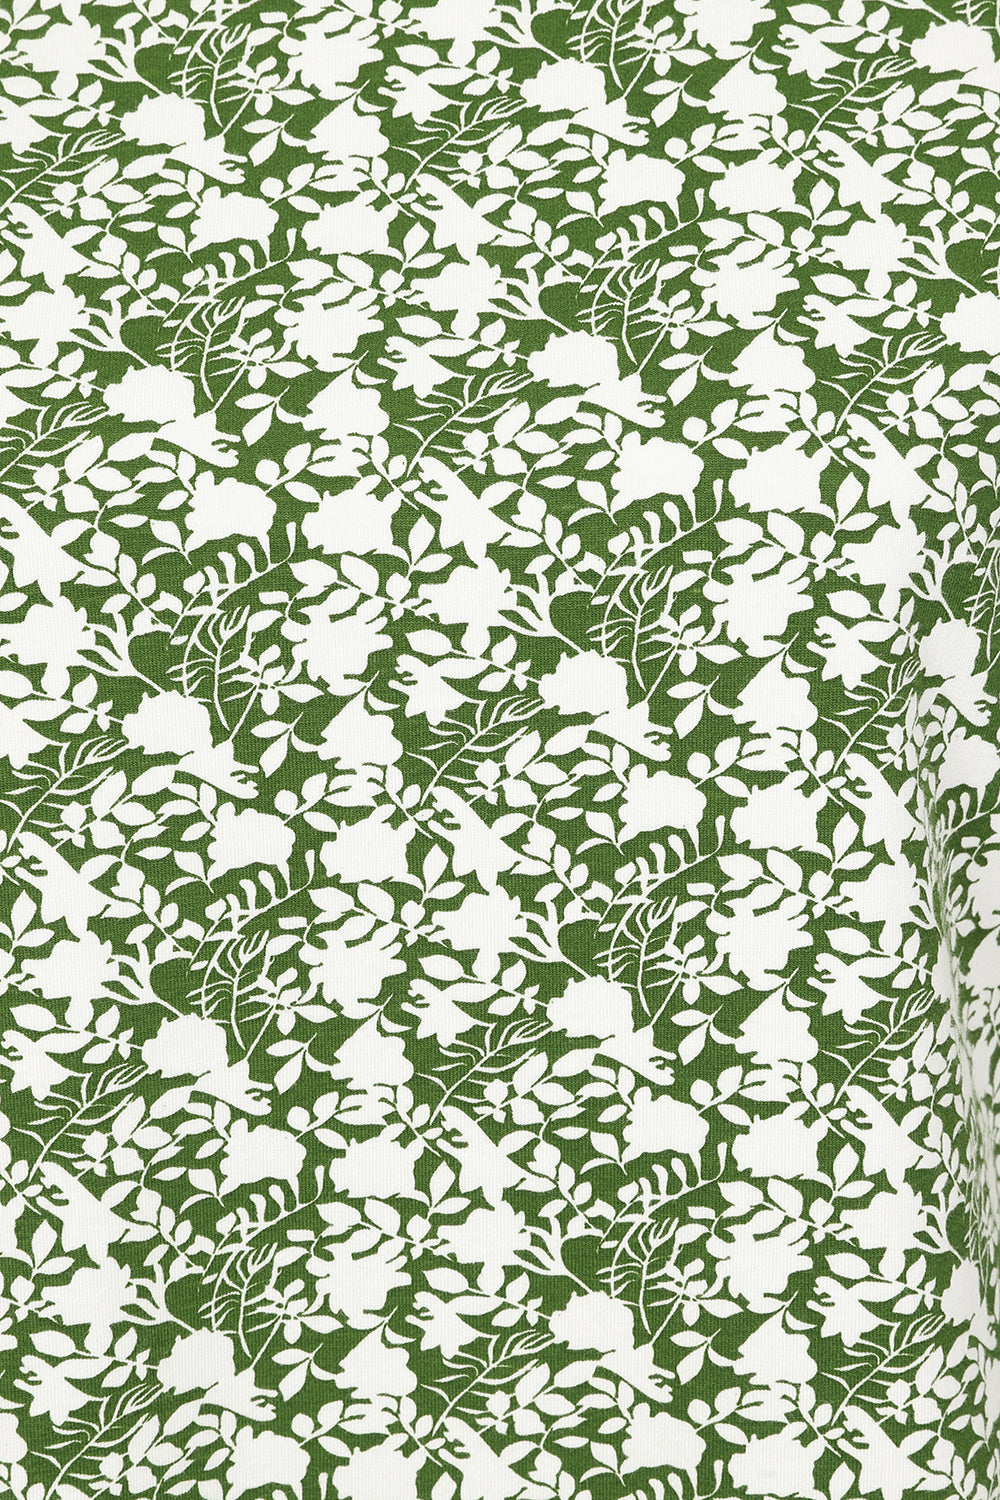 Fern Top-Green Foliage Print - GOTS Organic Cotton